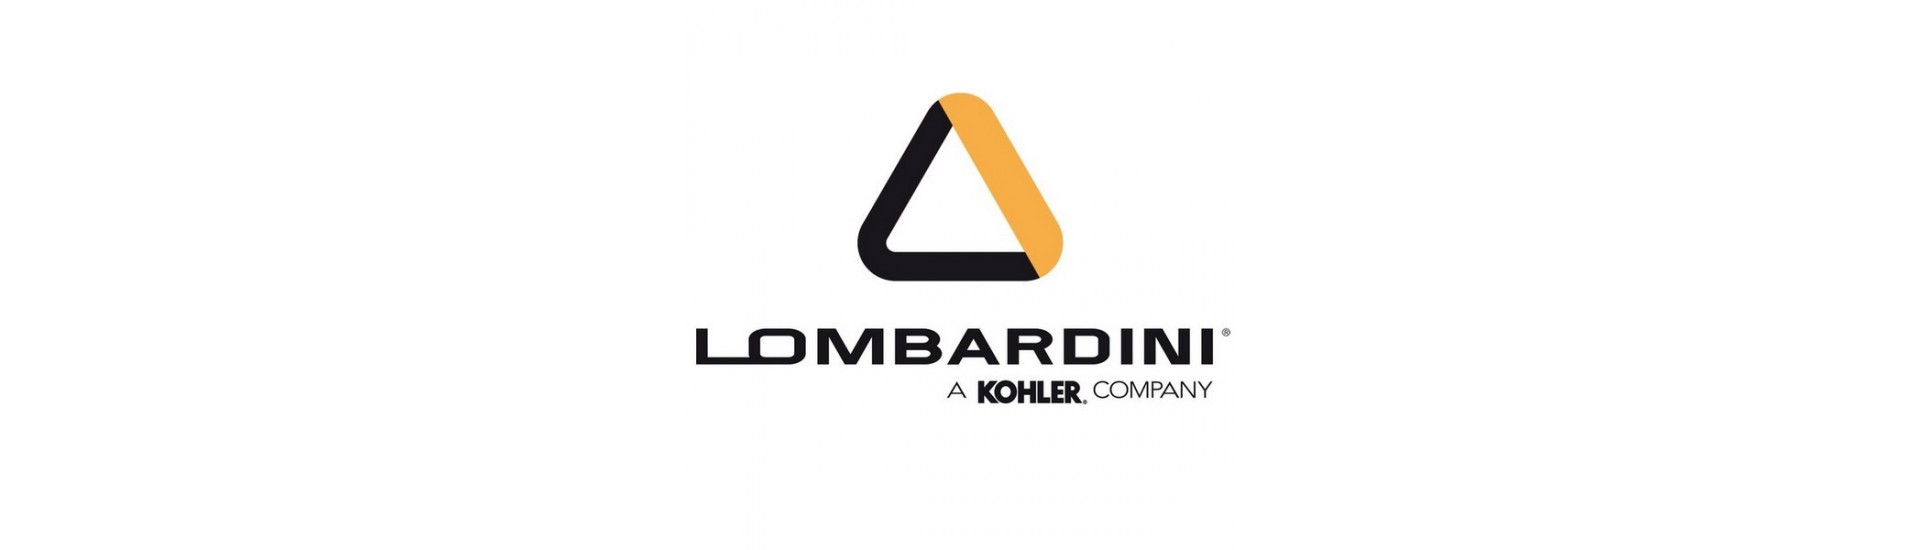 Motor occasion parts Lombardini au meilleur prix